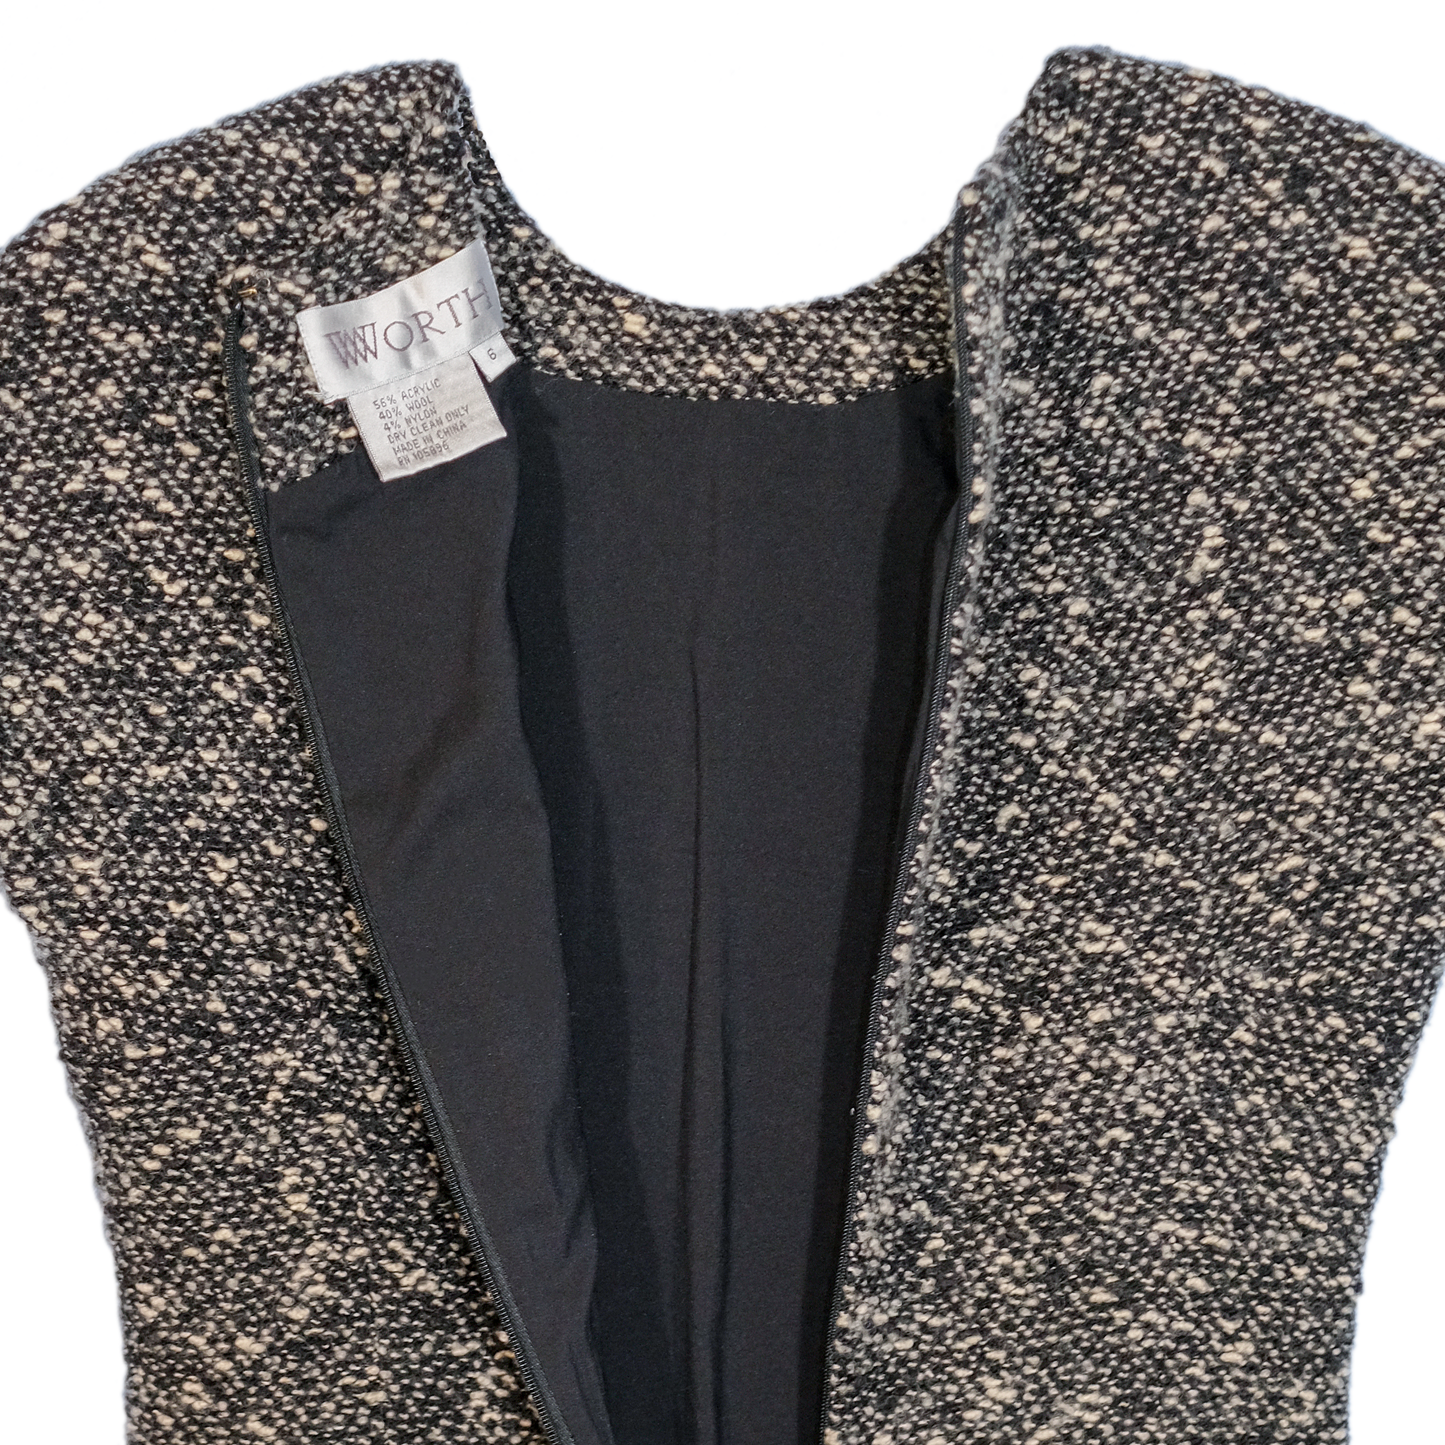 Vintage Worth Wool Blend Sweater Dress - Size 6